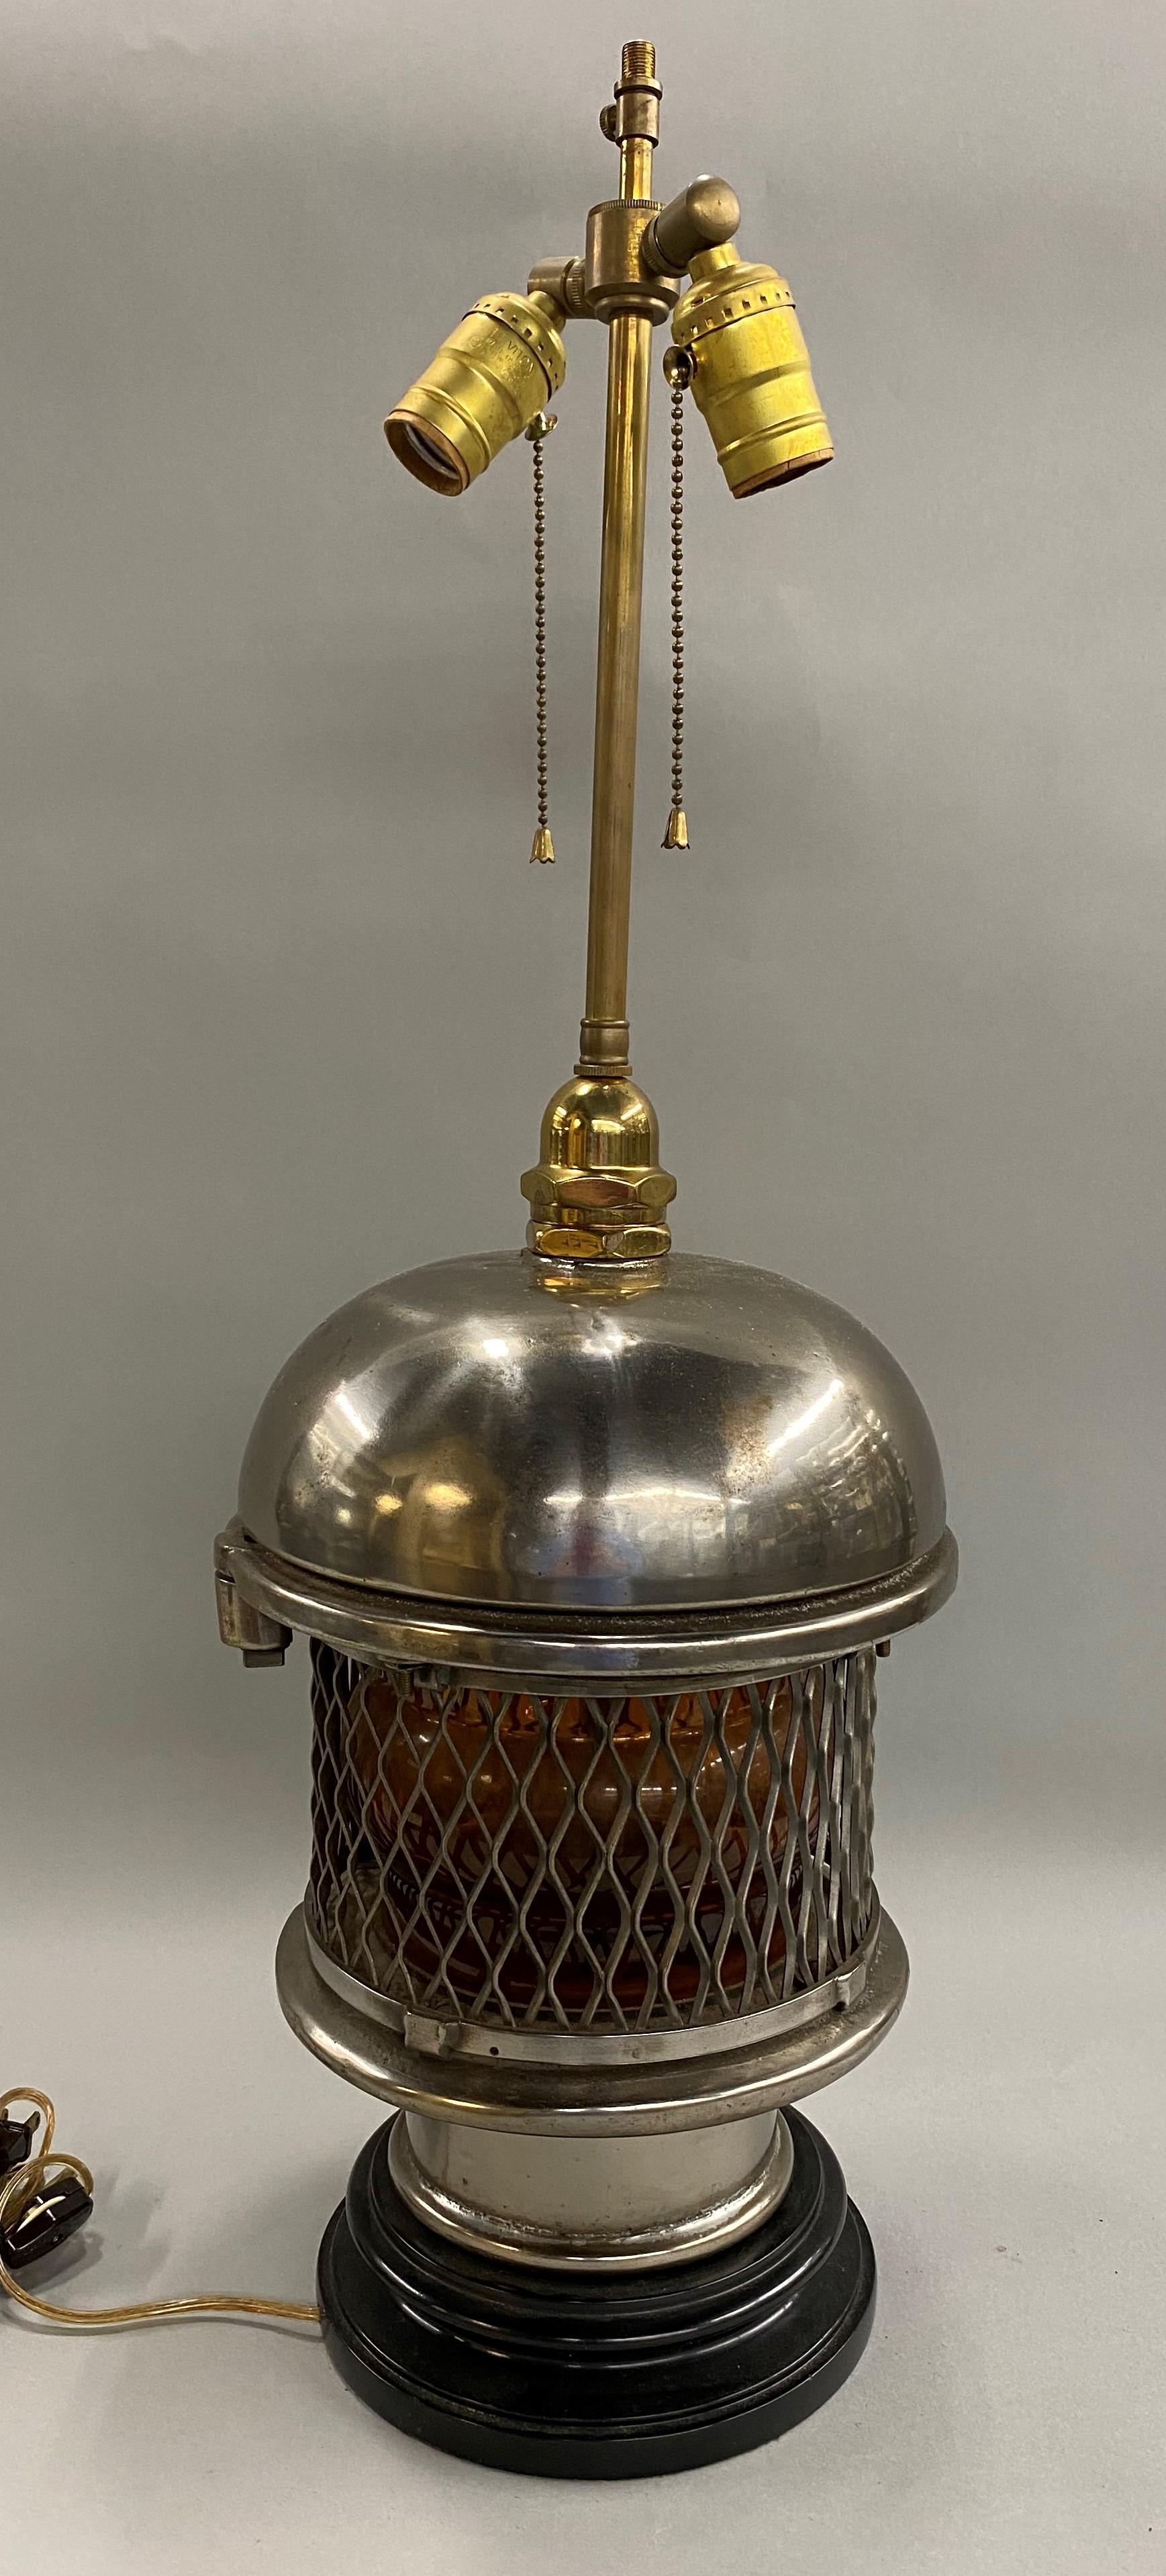 20th Century Chrome Top Nautical Ship’s Lantern Converted Table Lamp, circa 1930s